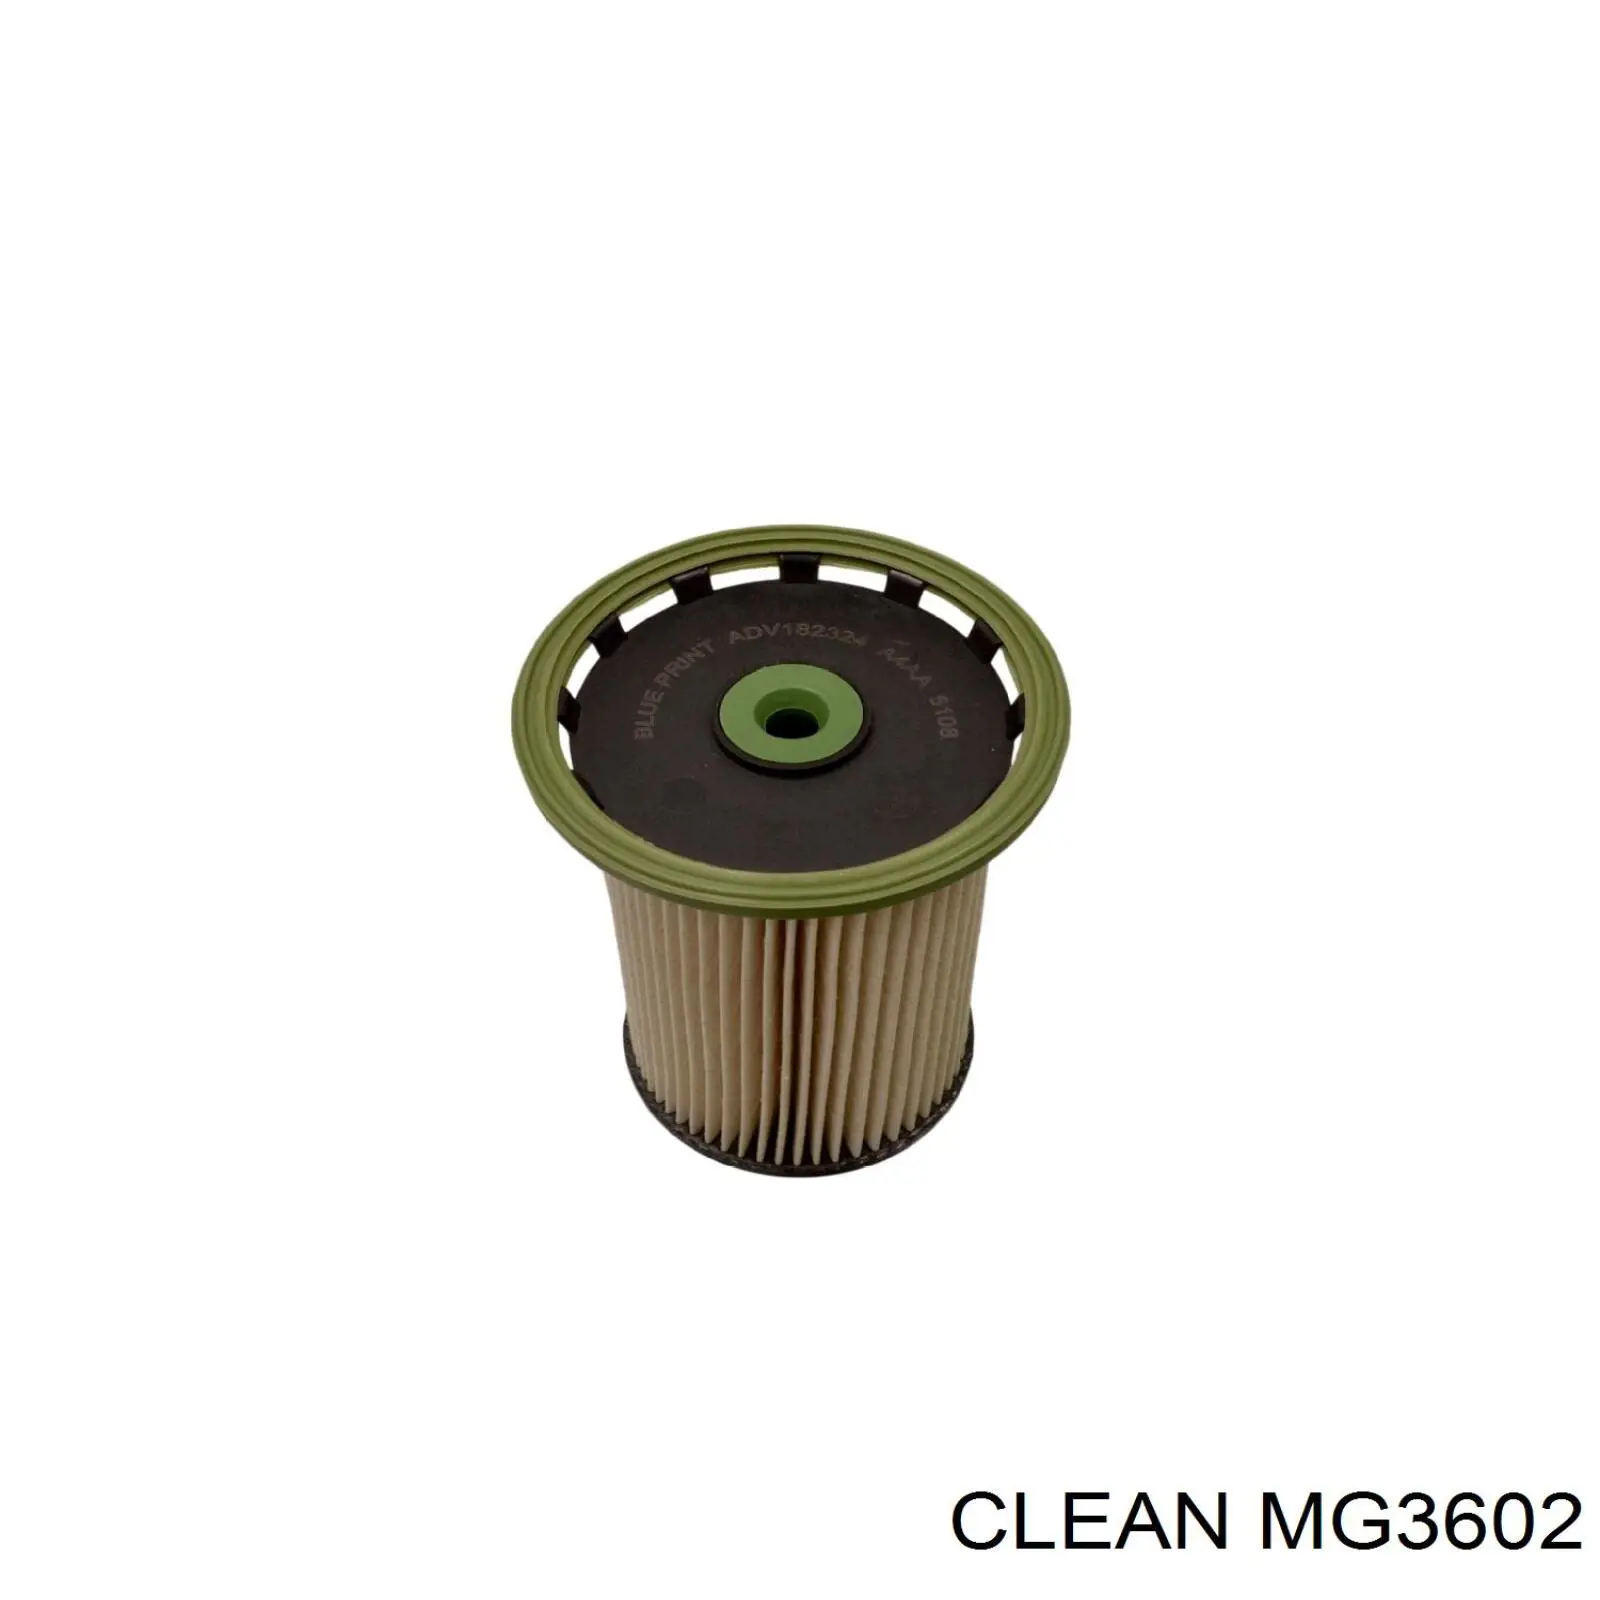 MG3602 Clean filtro de combustible